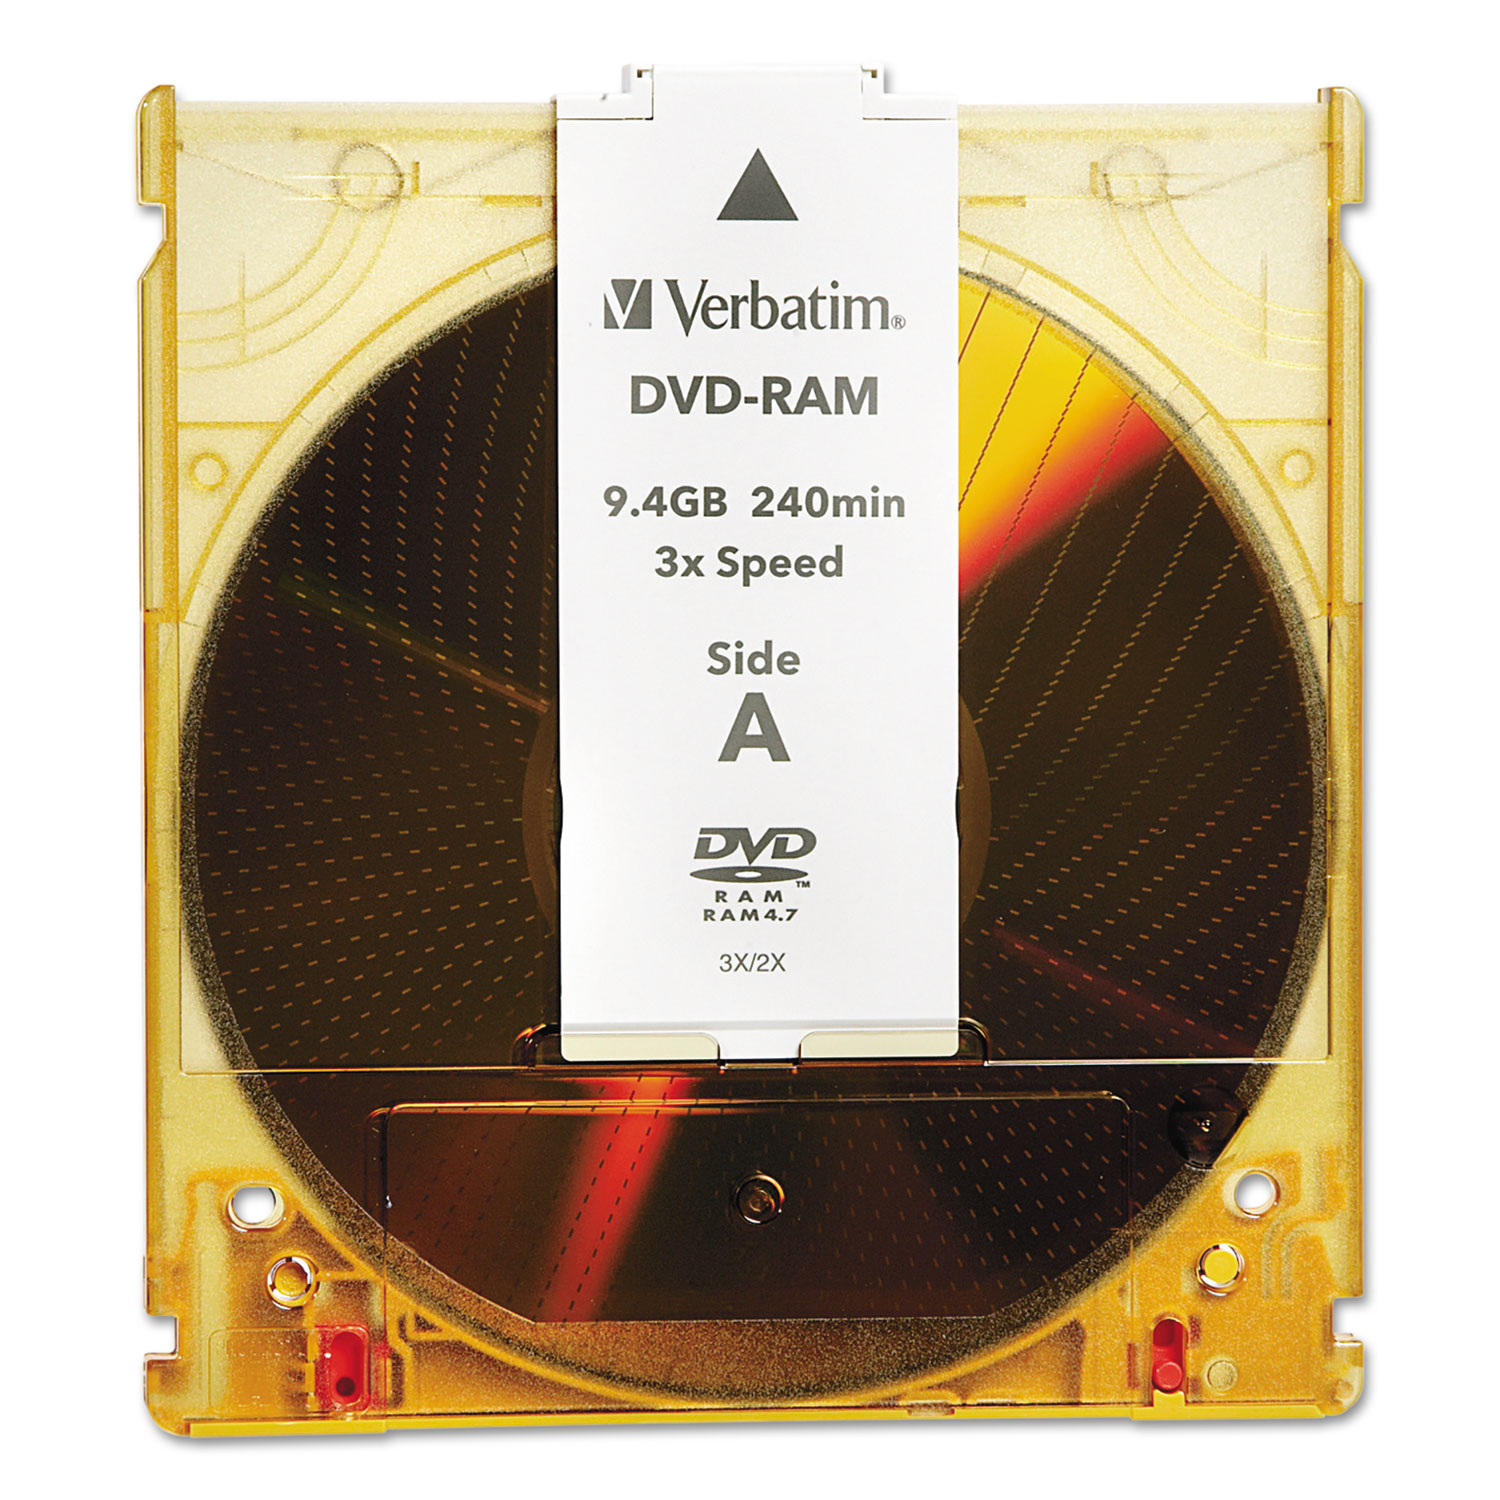 Type 4 Double-Sided DVD-RAM Cartridge, 9.4GB, 3x